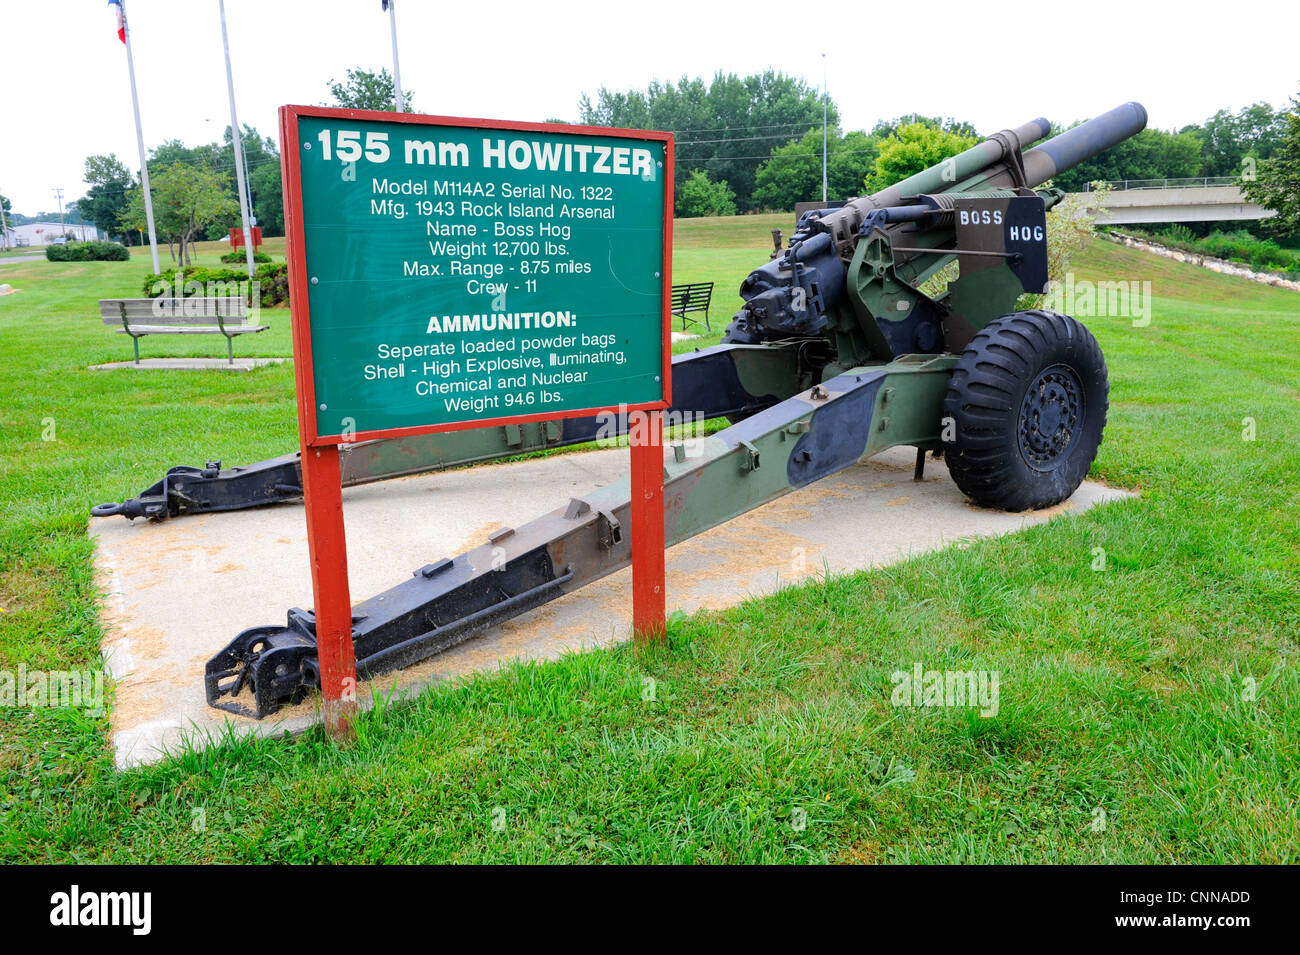 155 mm Howitzer artillery gun Stock Photo